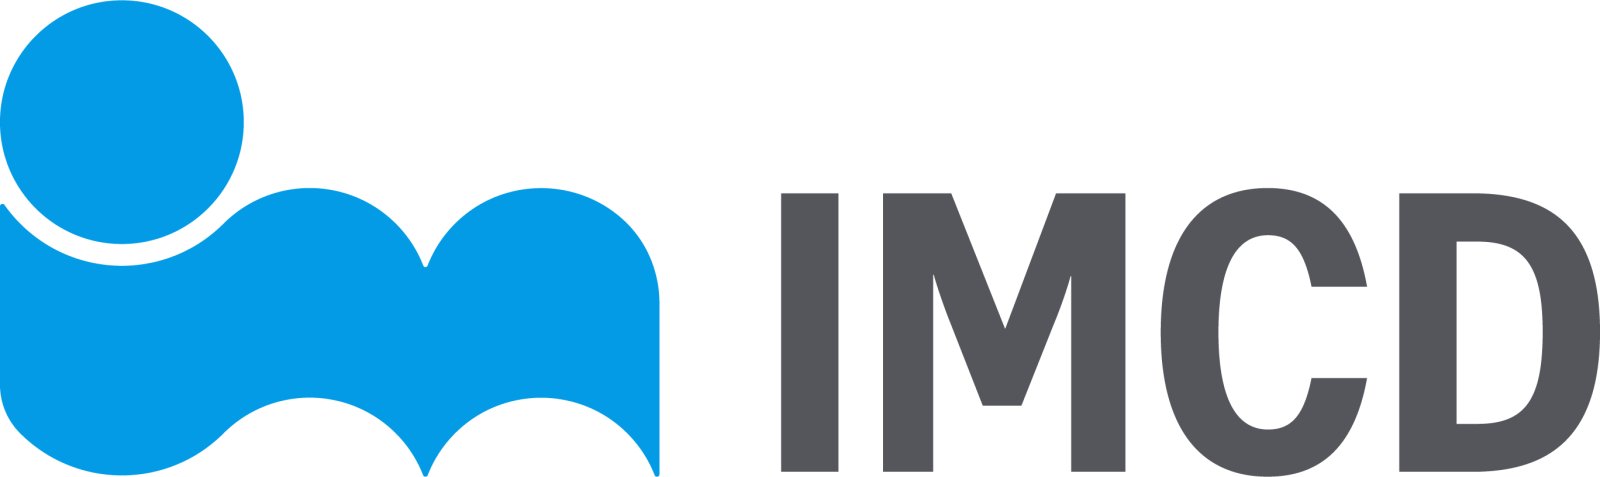 Logo IMCD Italia 